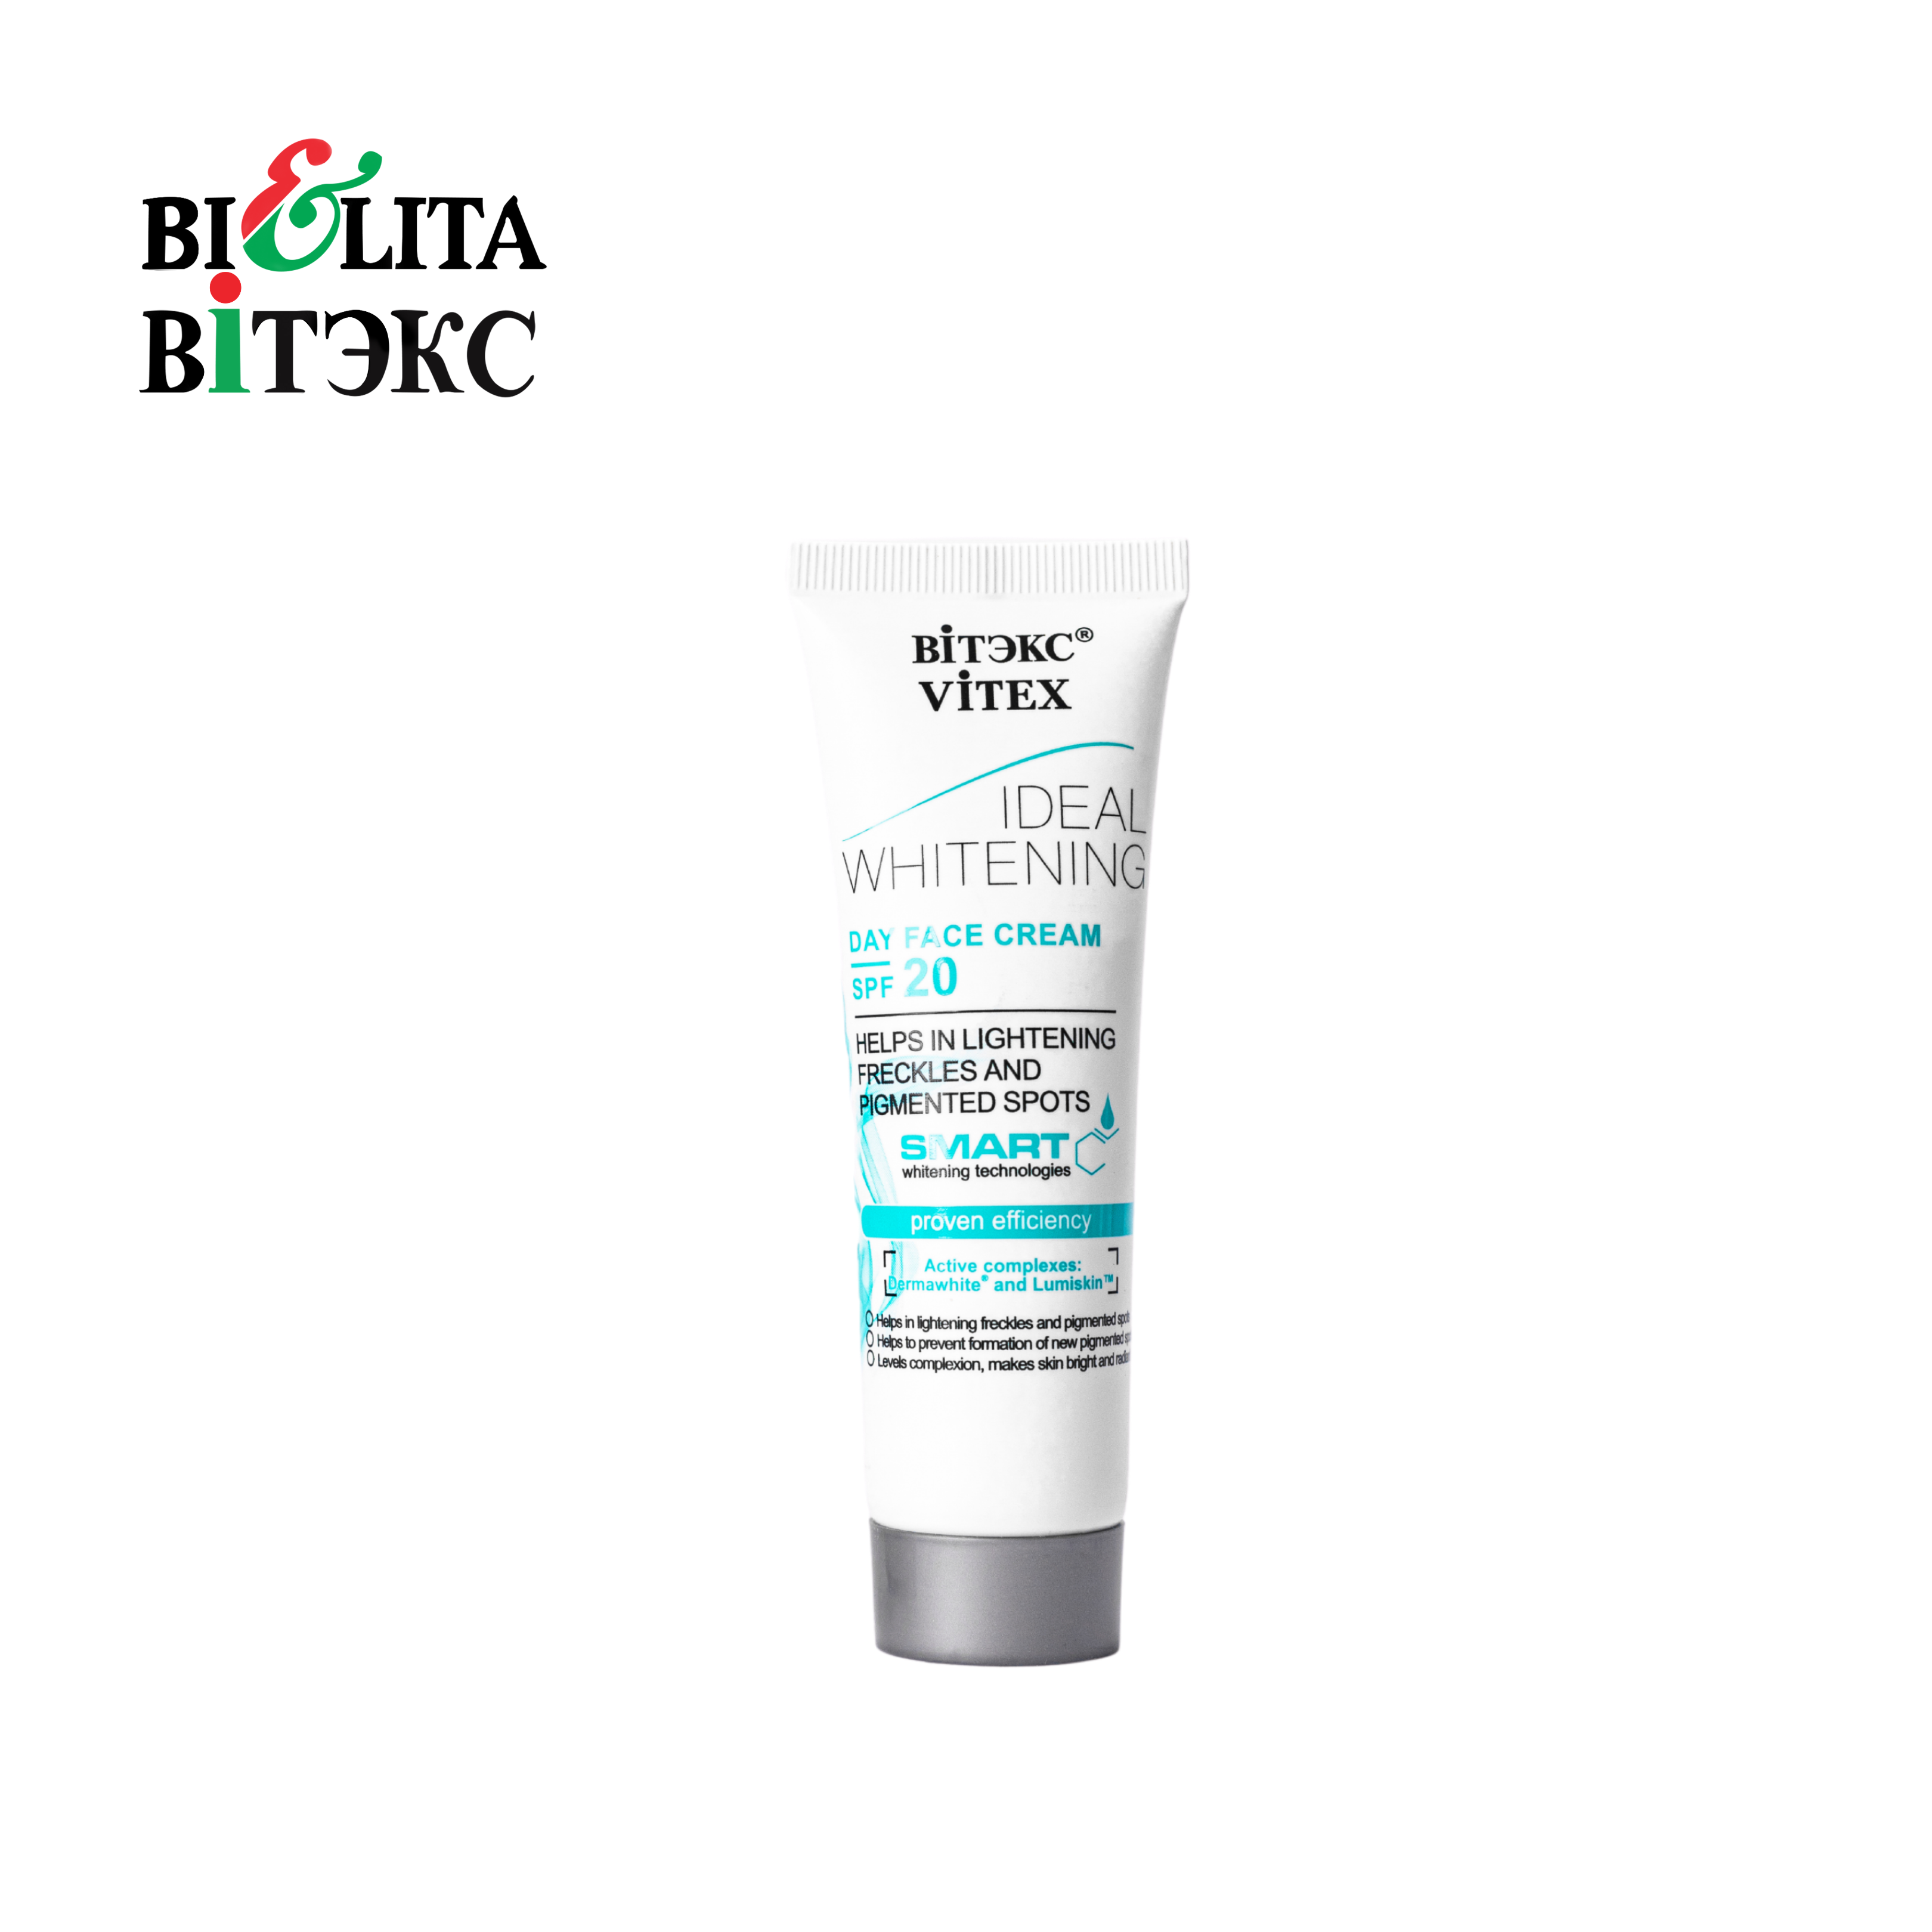 Belita Vitex IDEAL WHITENING Day Face Cream SPF 20